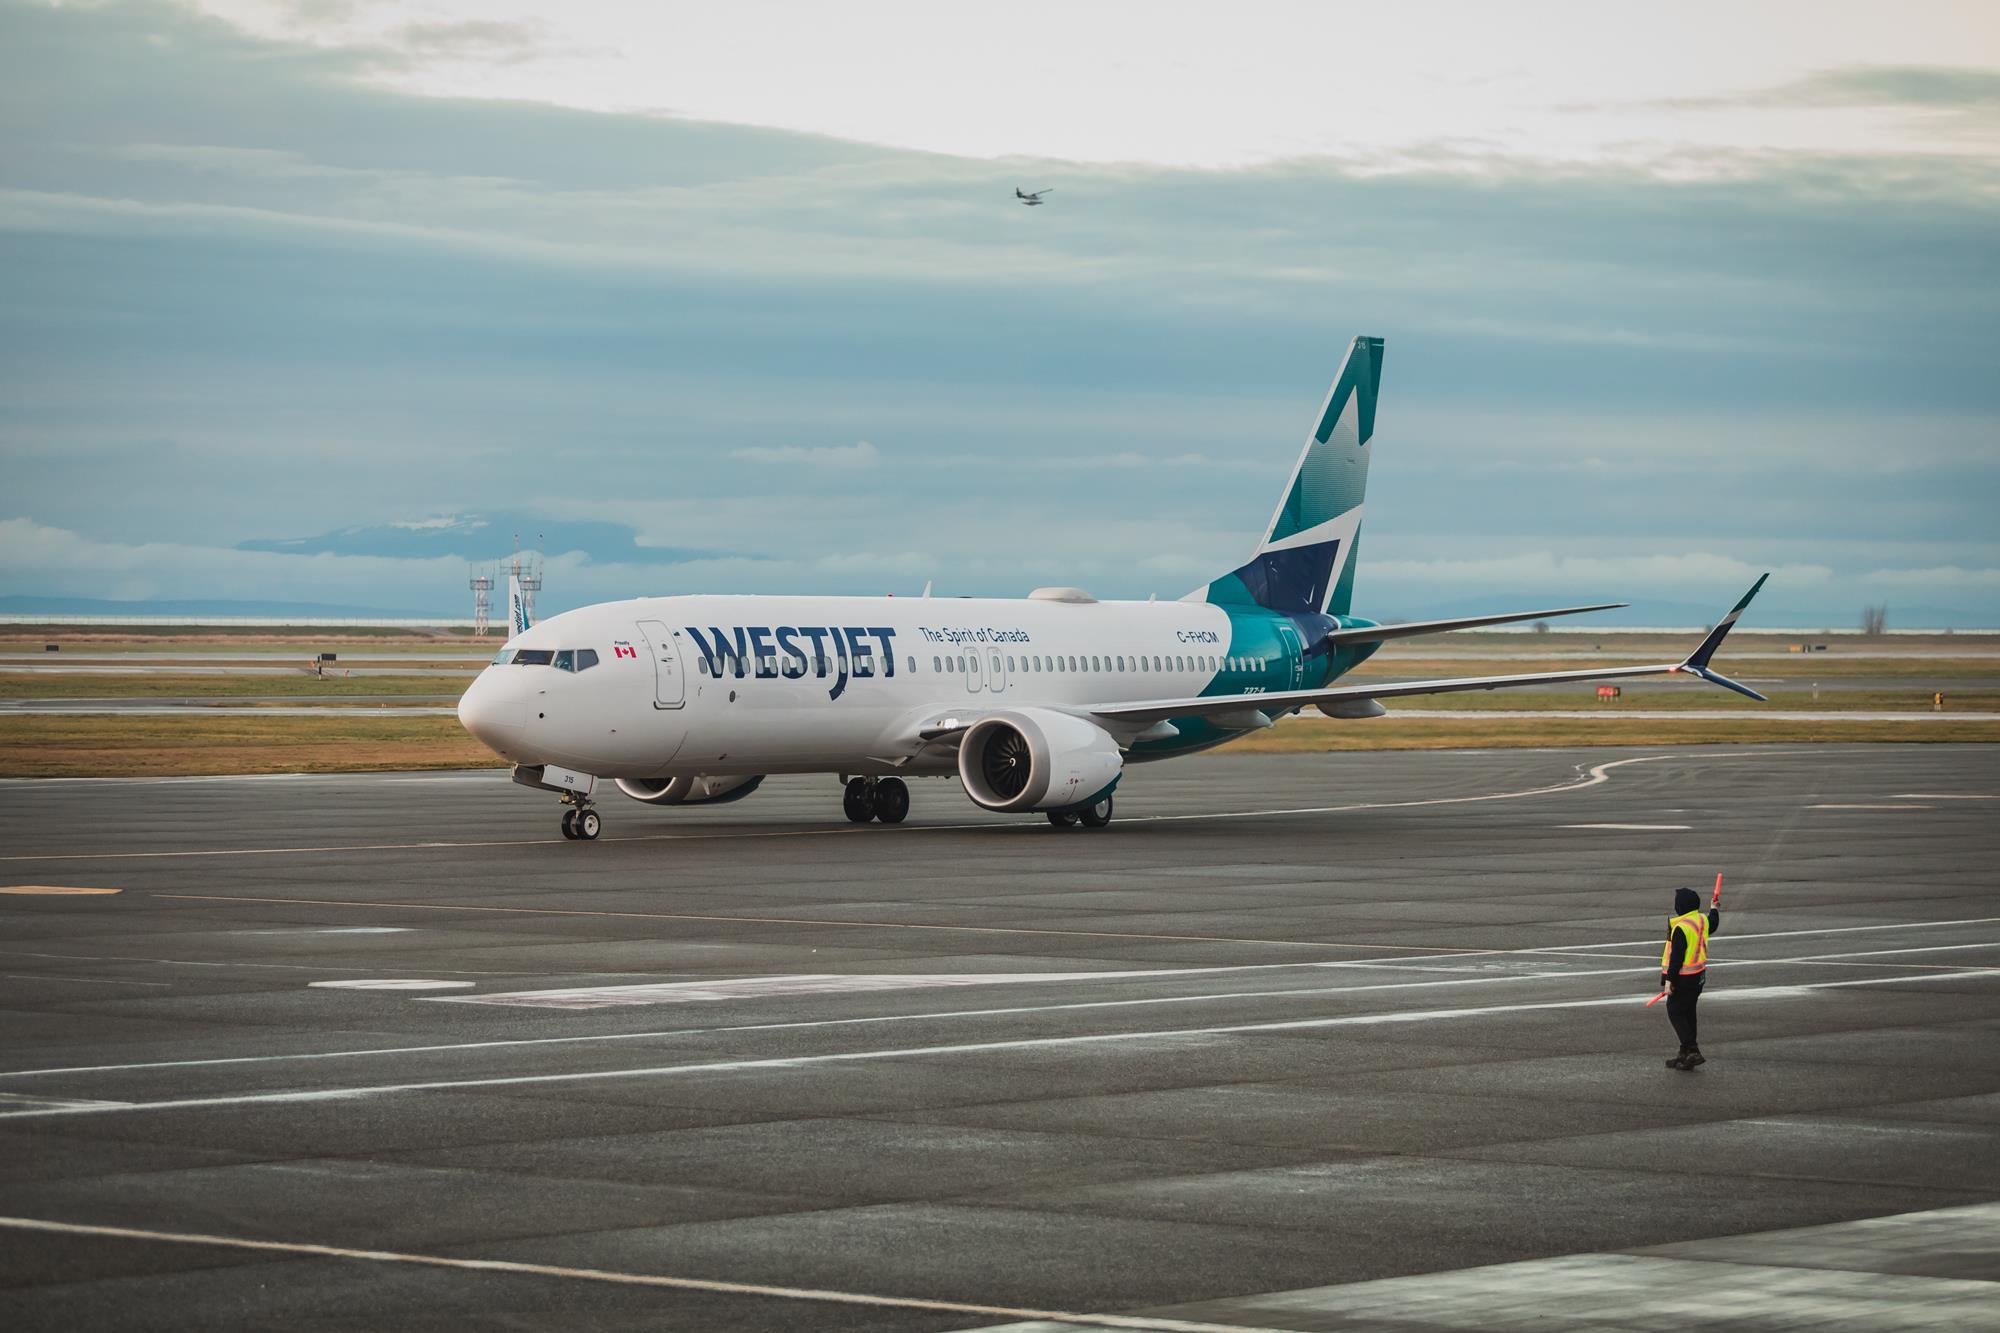 WestJet To Base All 787s, Long-Haul Flying At Calgary